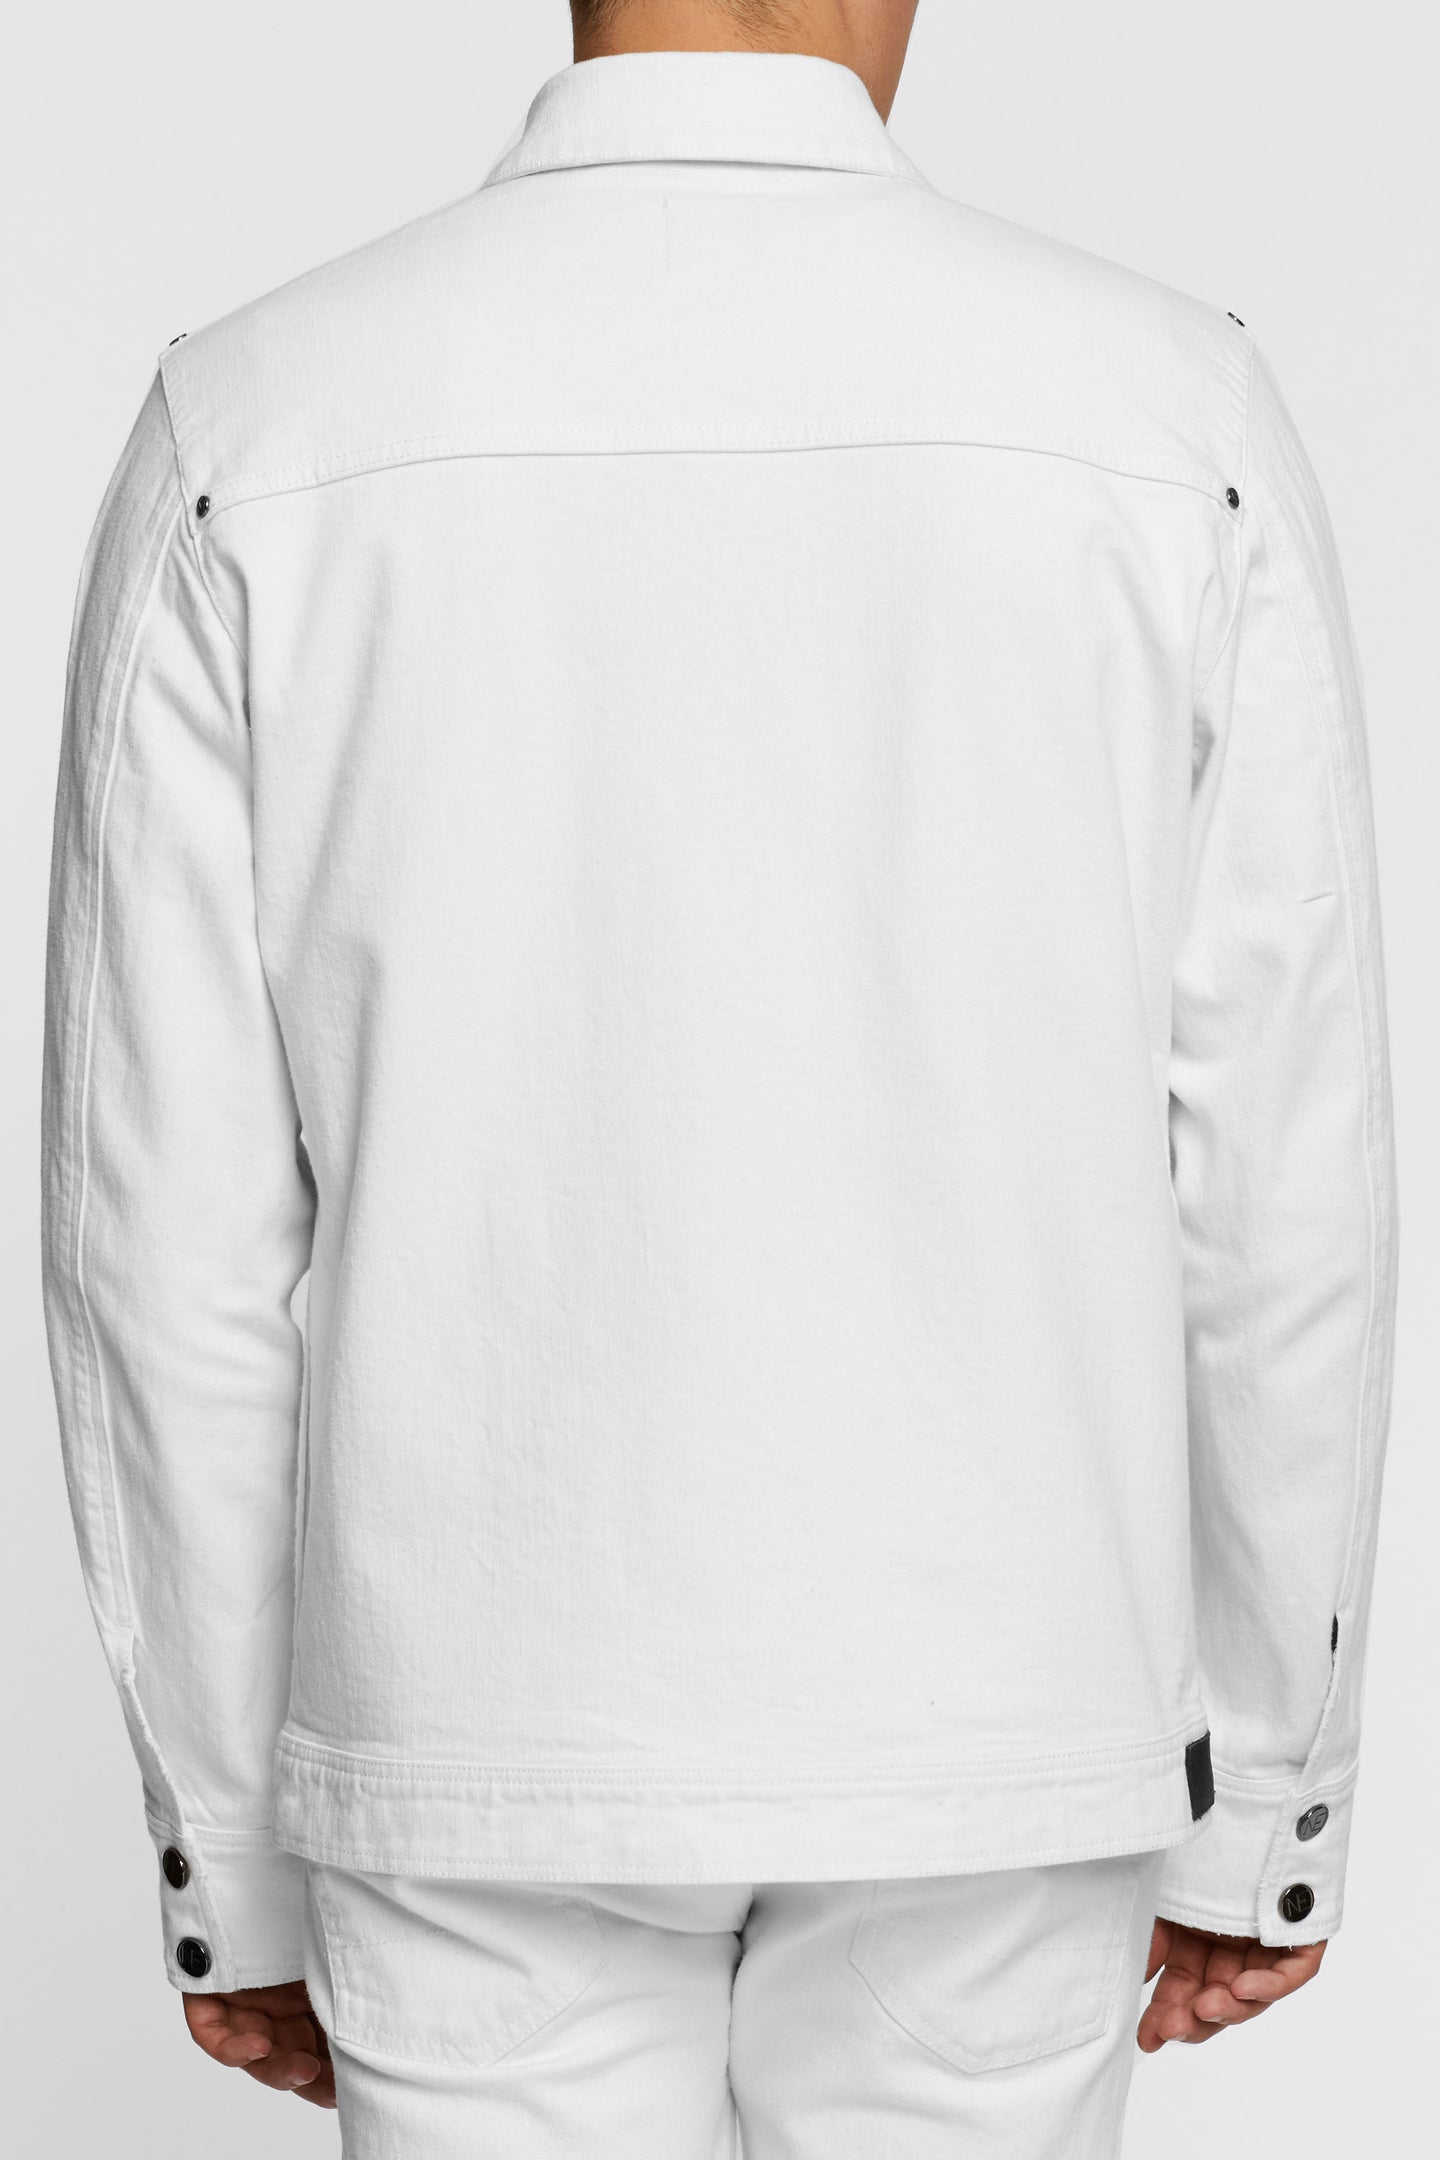 men's white denim jacket